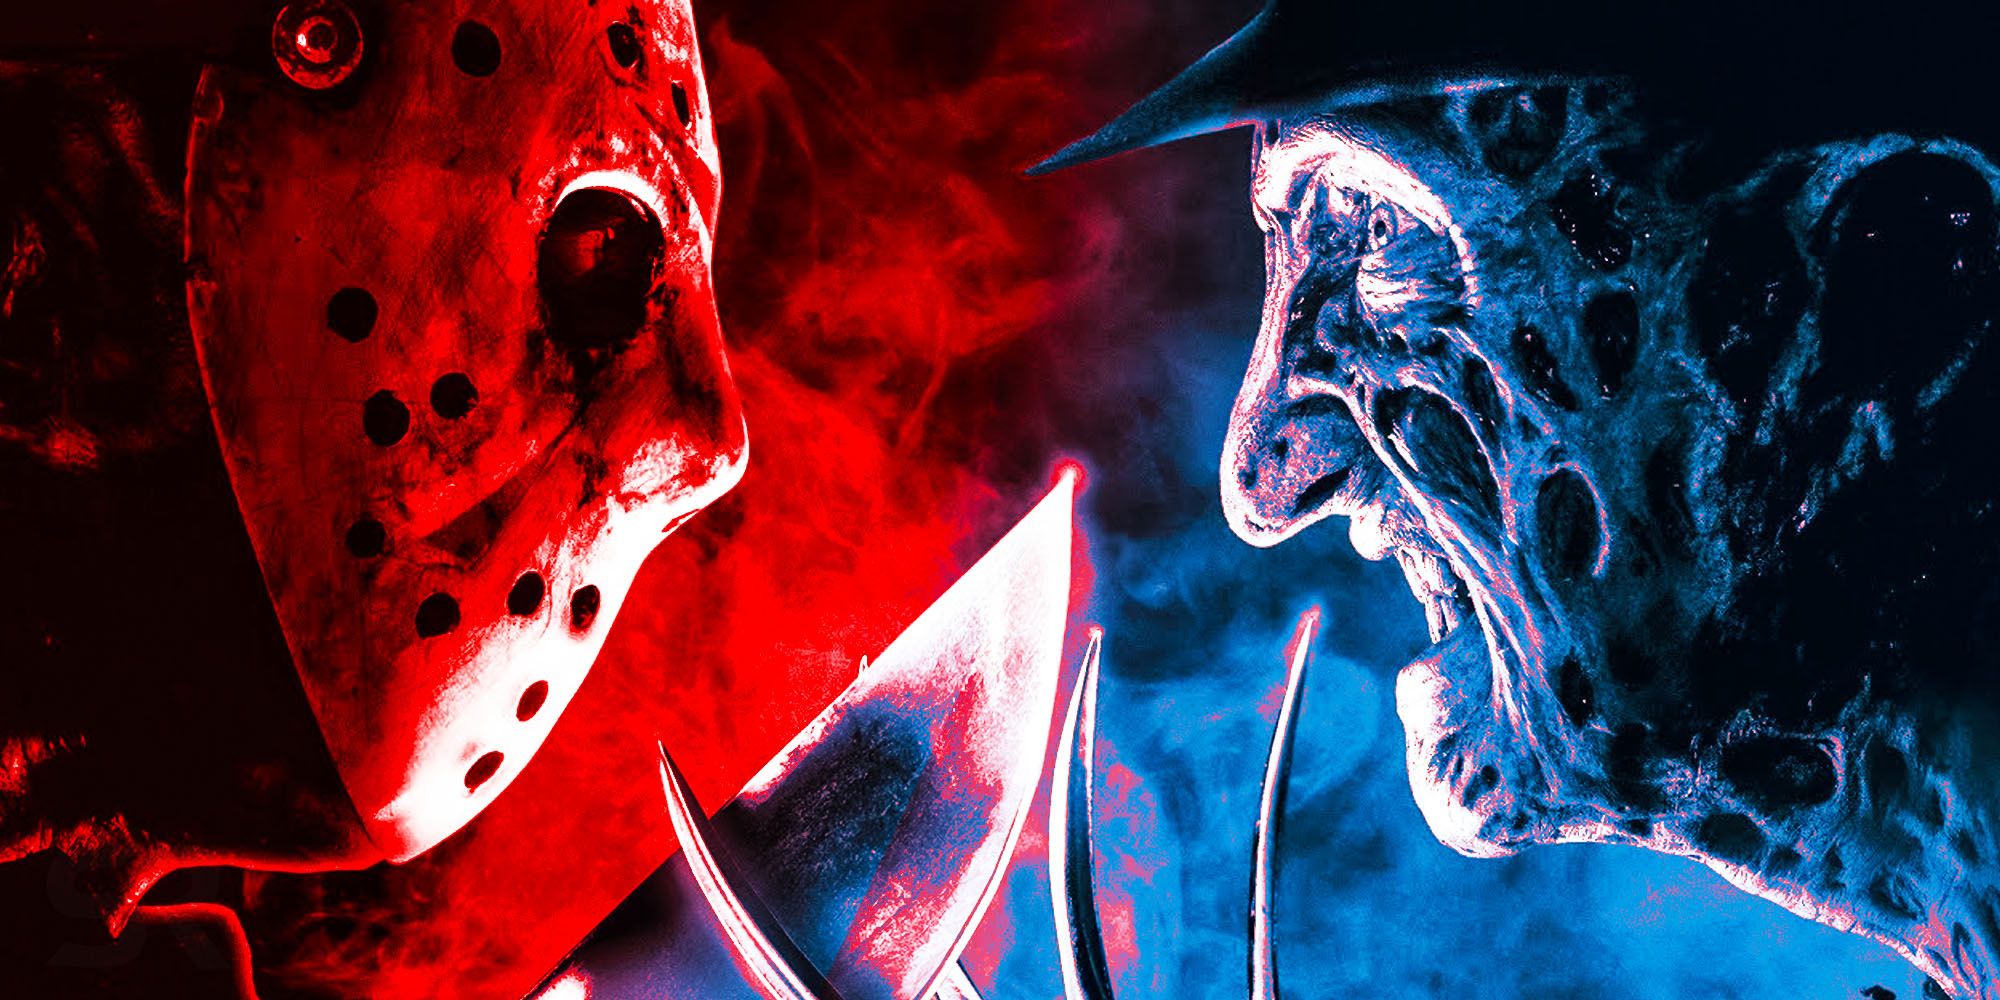 Freddy vs Jason original pitch